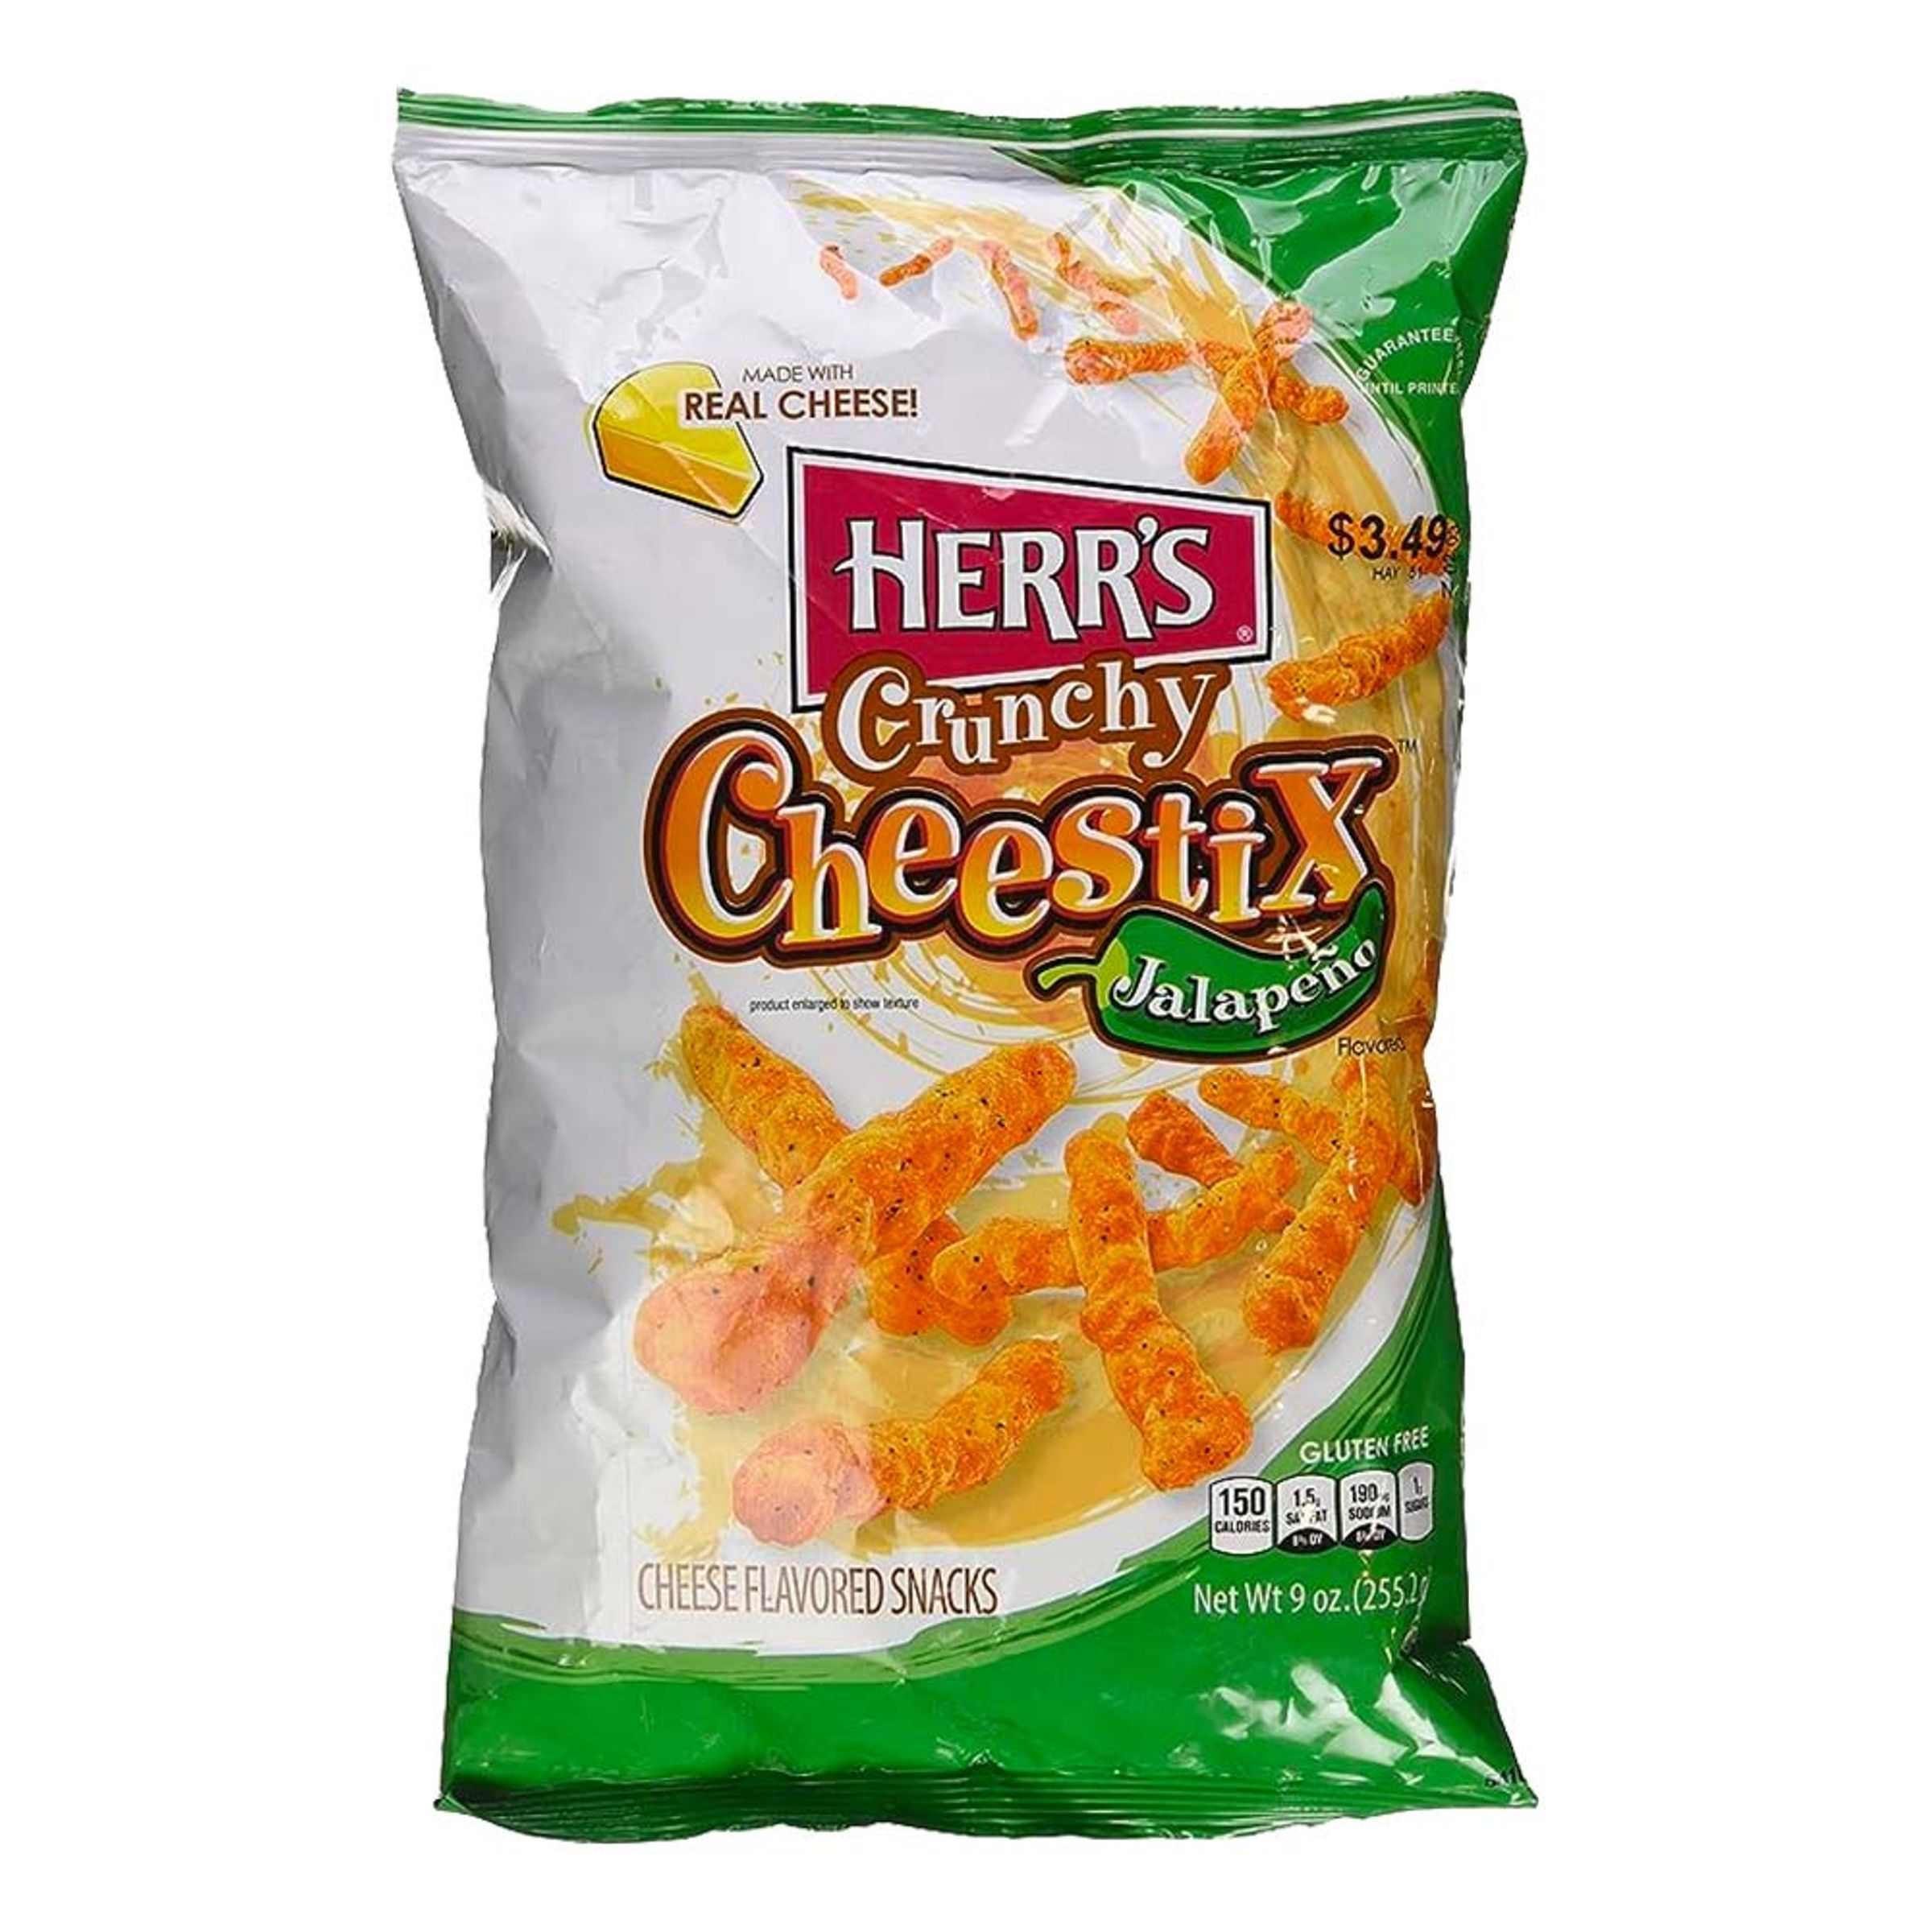 Herrs Crunchy Cheestix Jalapeño - 227 gram